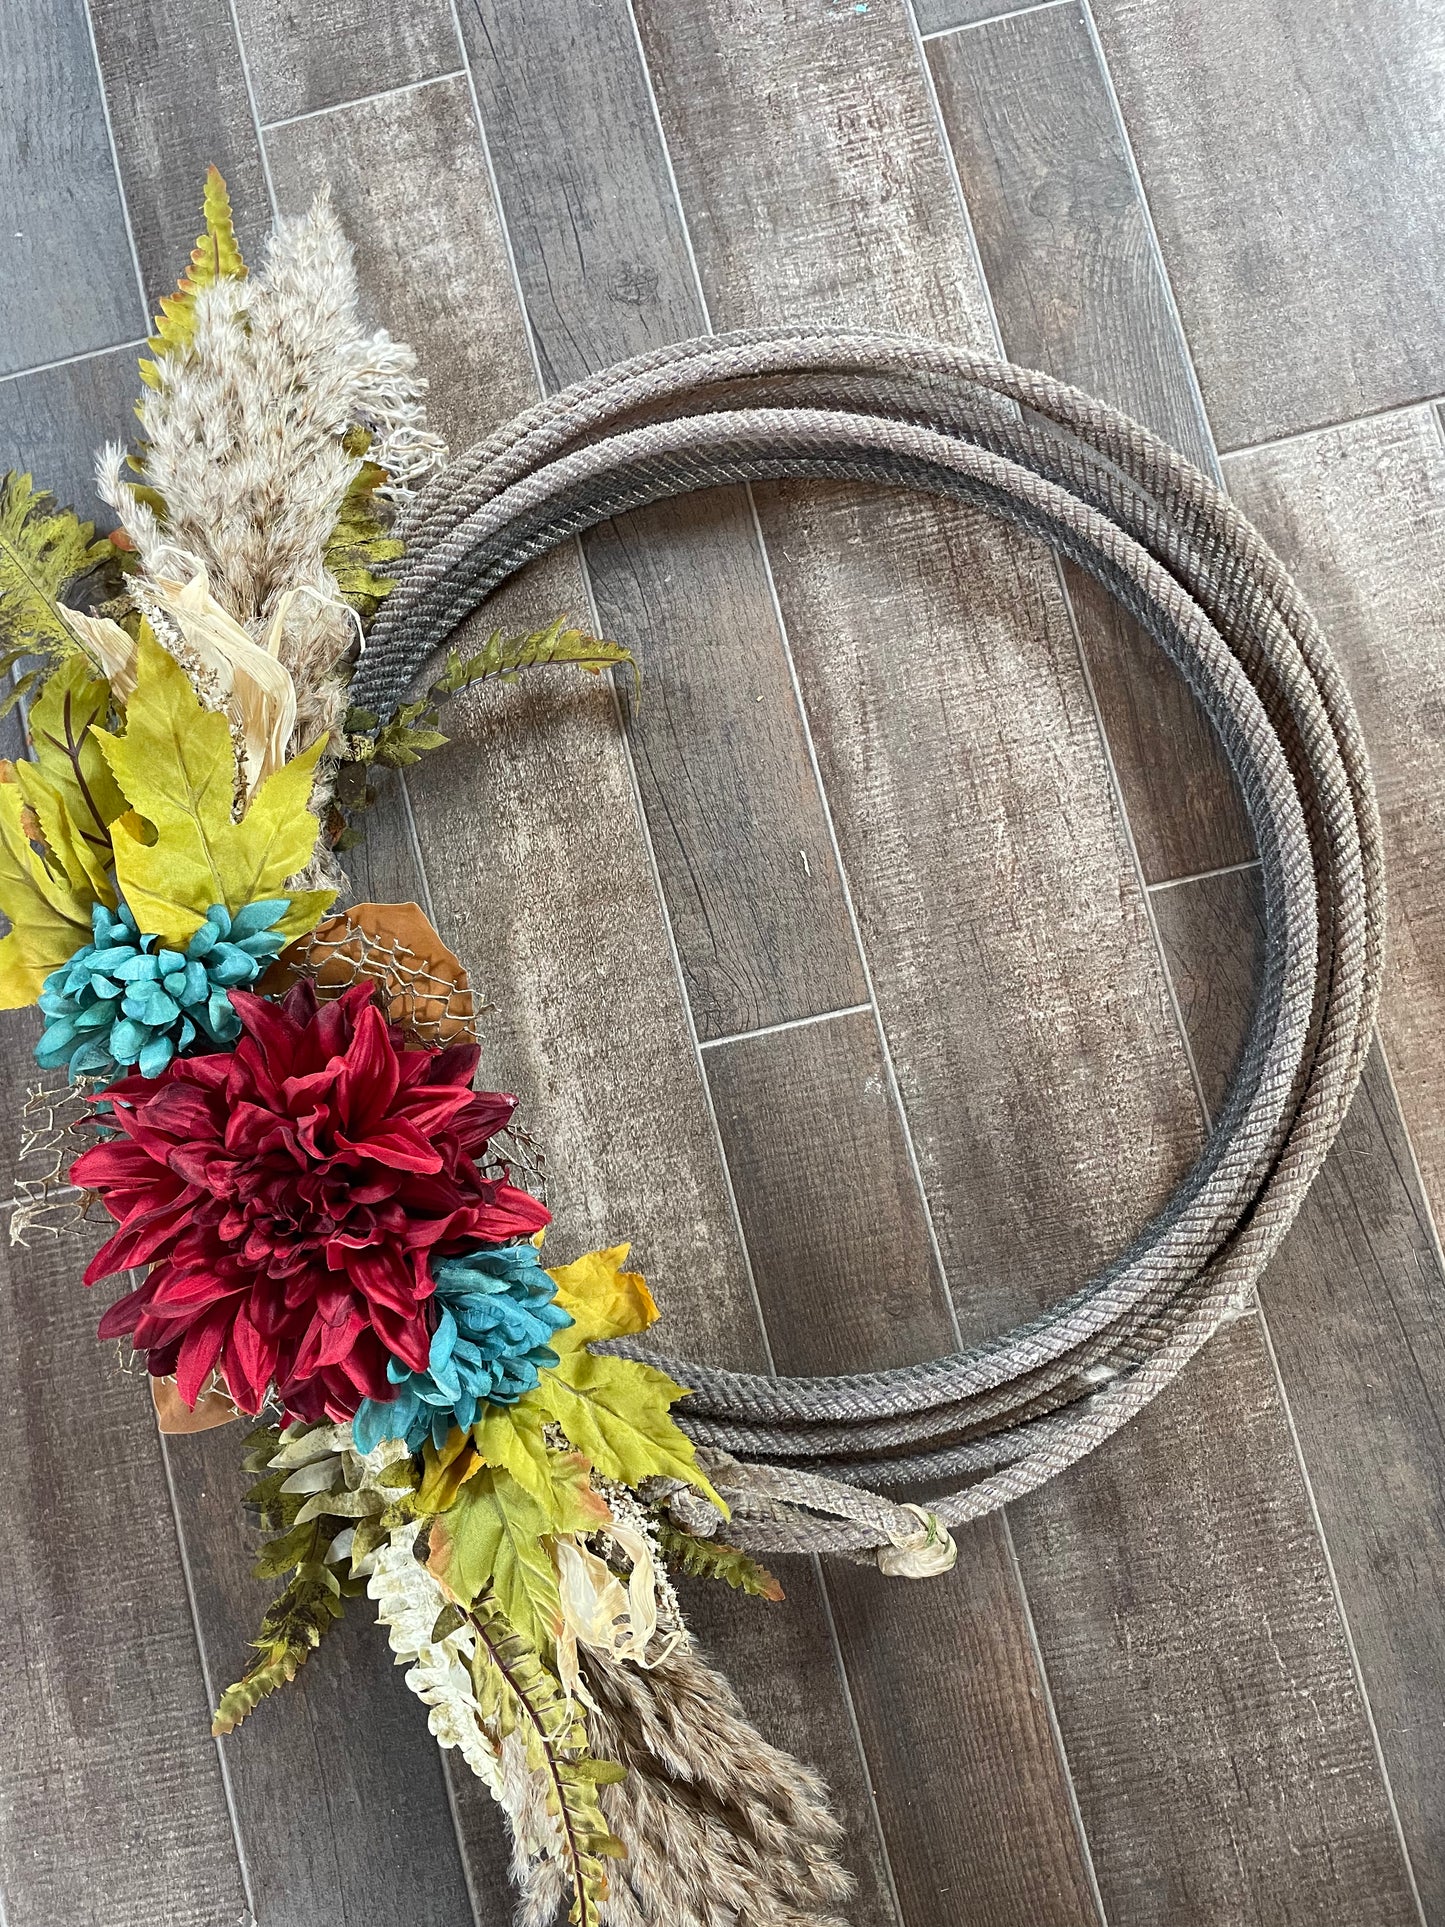 Handmade Lariat Rope Western Wreath